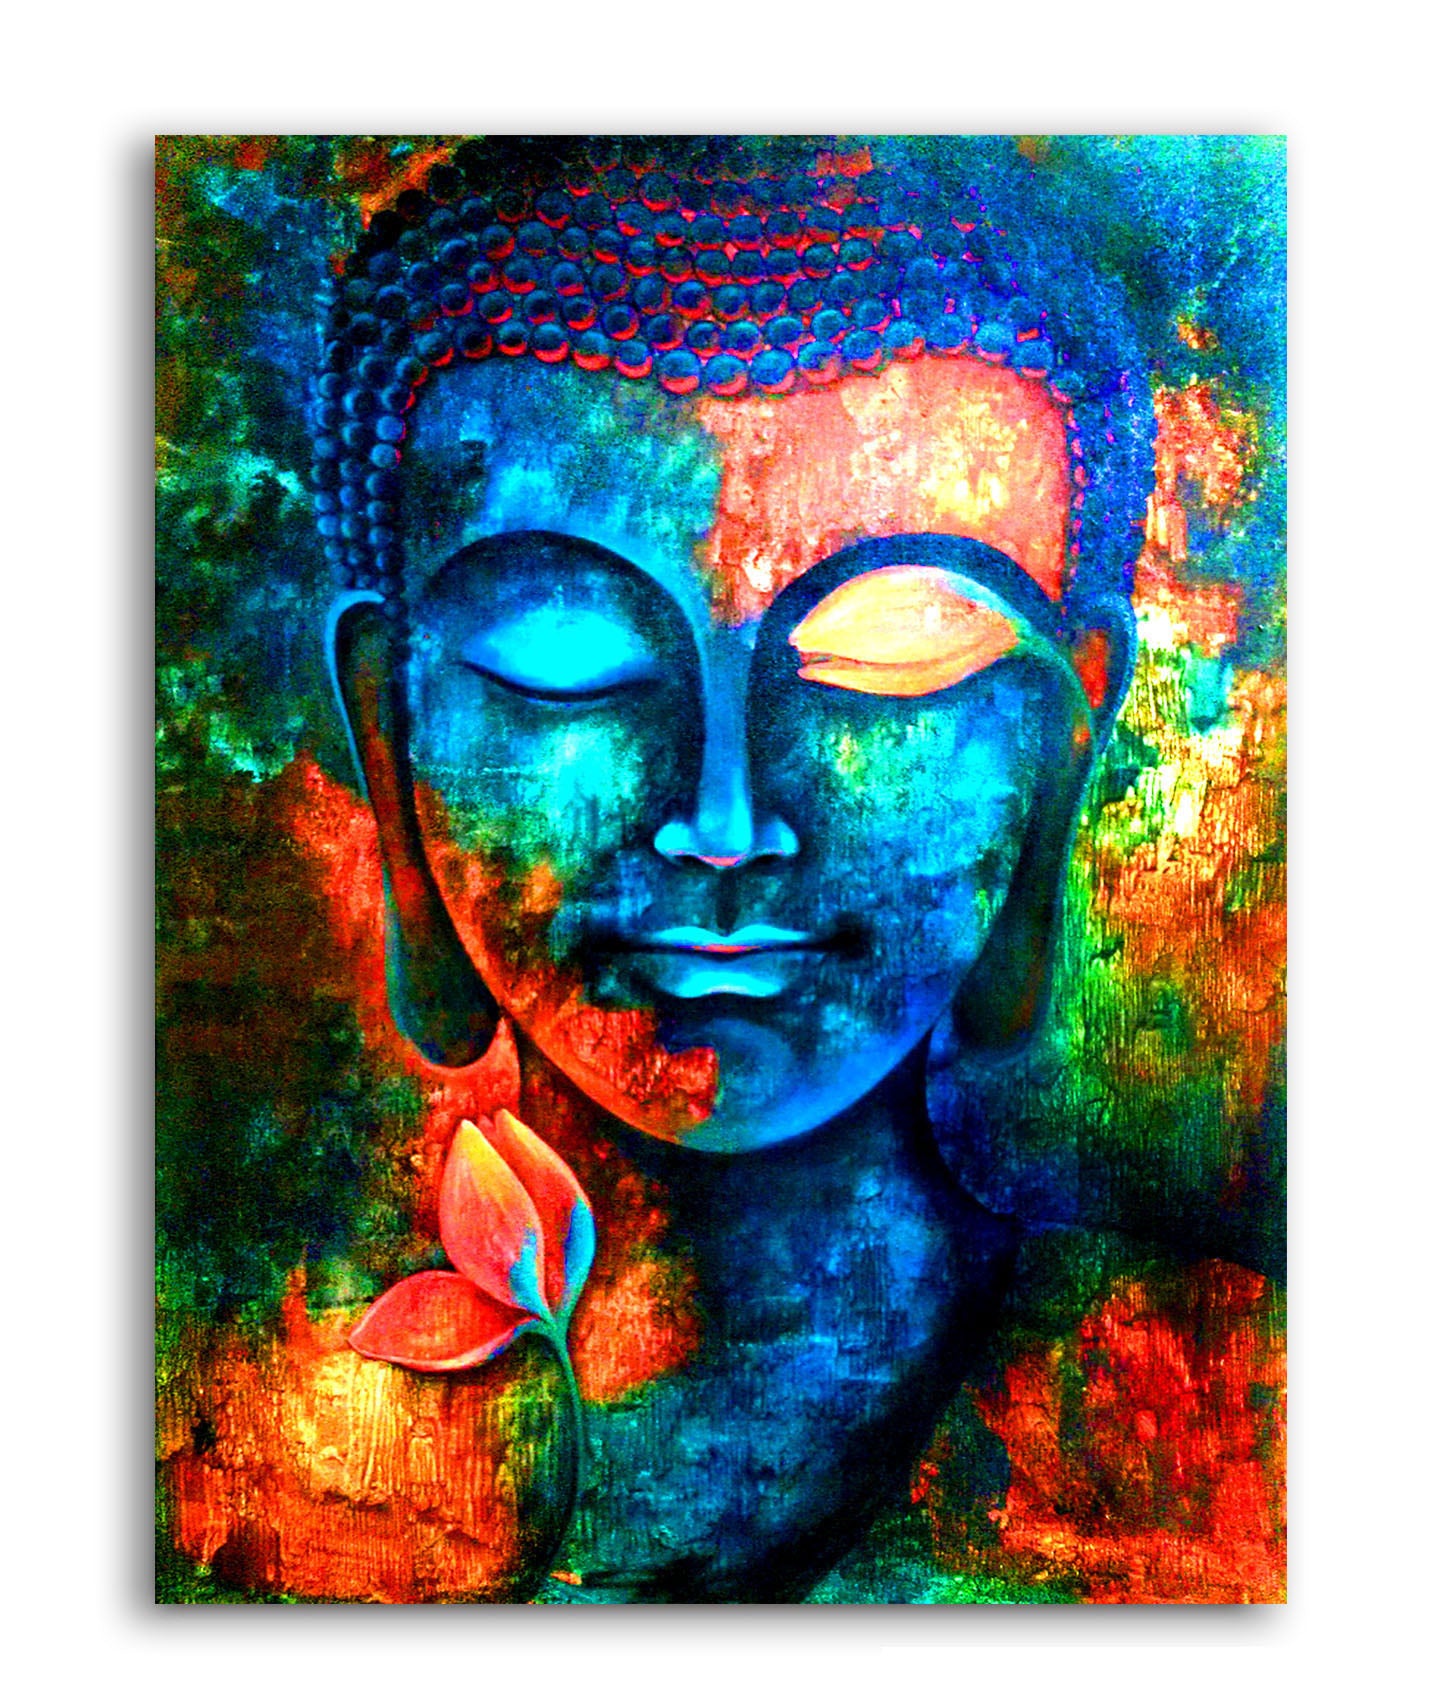 Blue Buddha - Unframed Canvas Painting